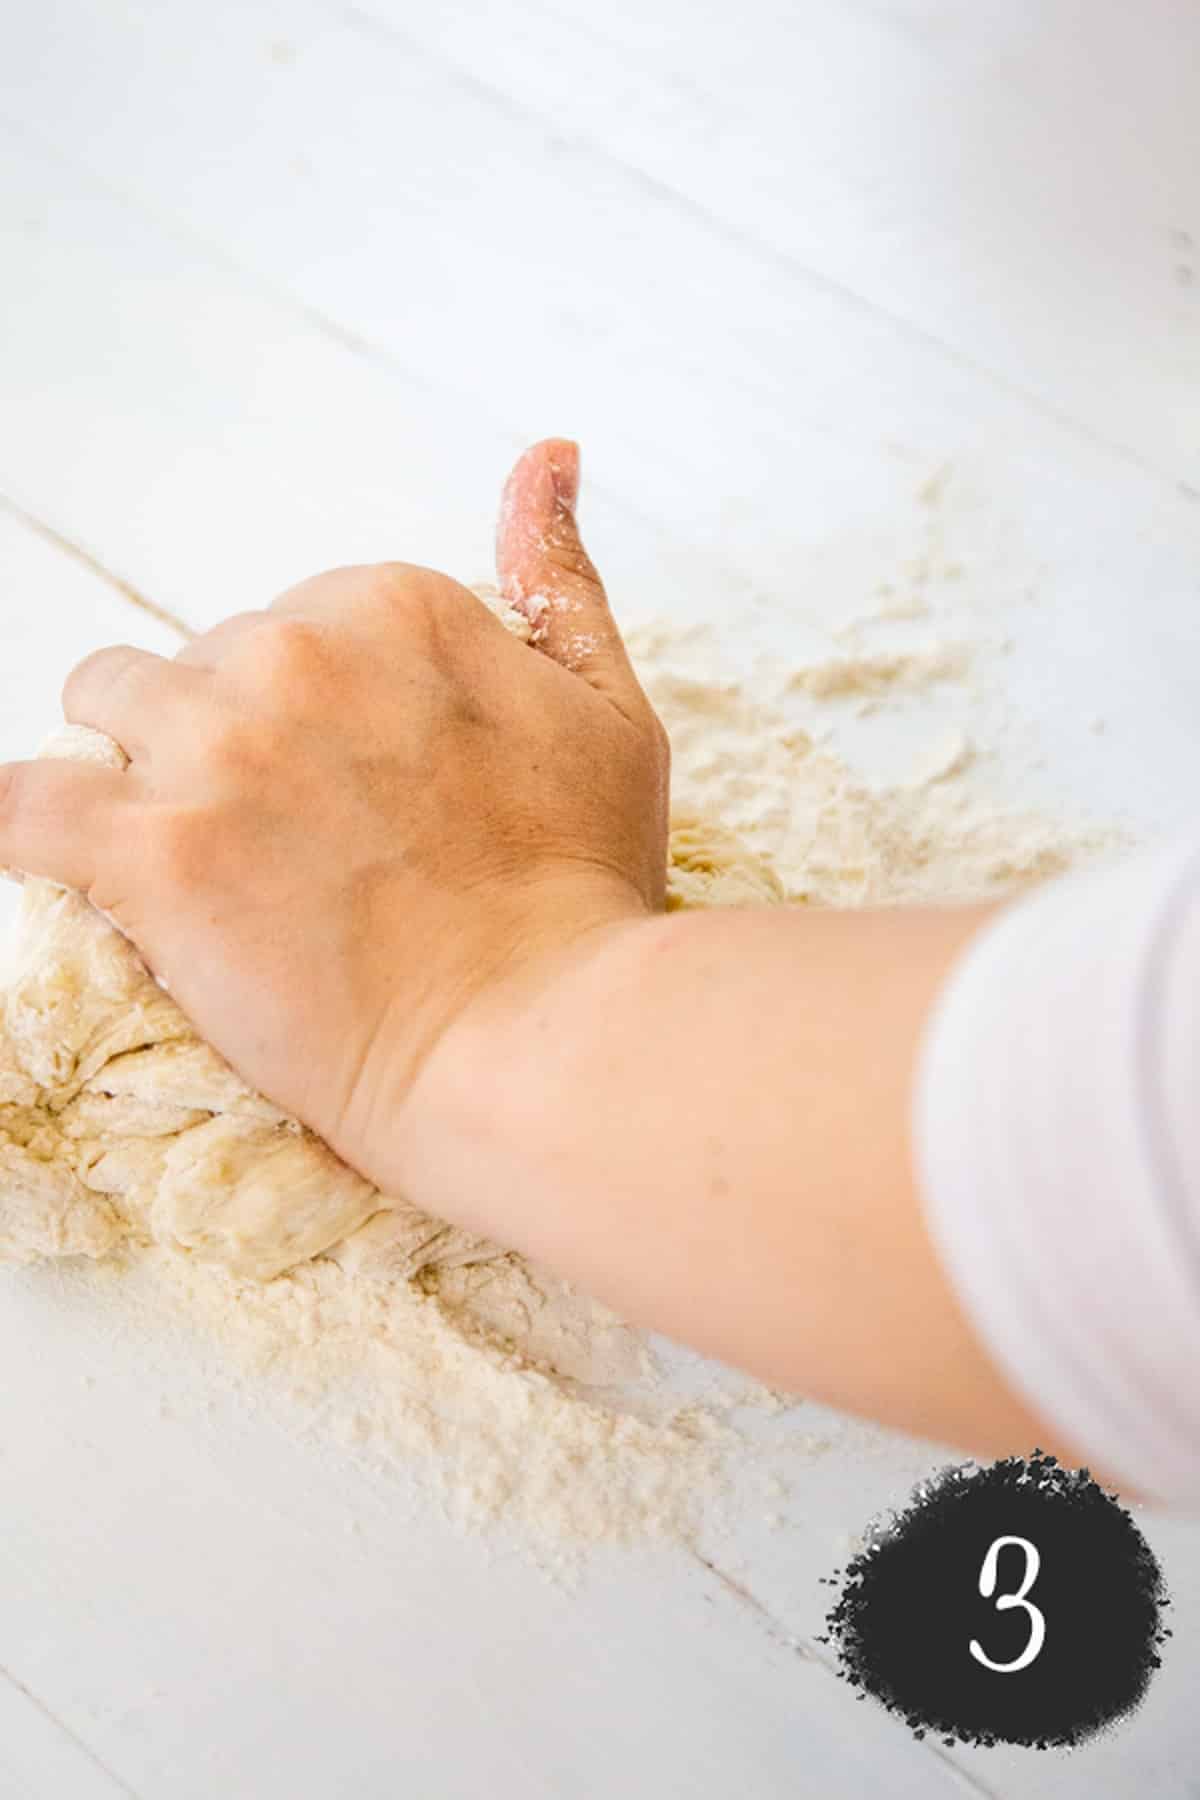 A hand kneading pizza dough.